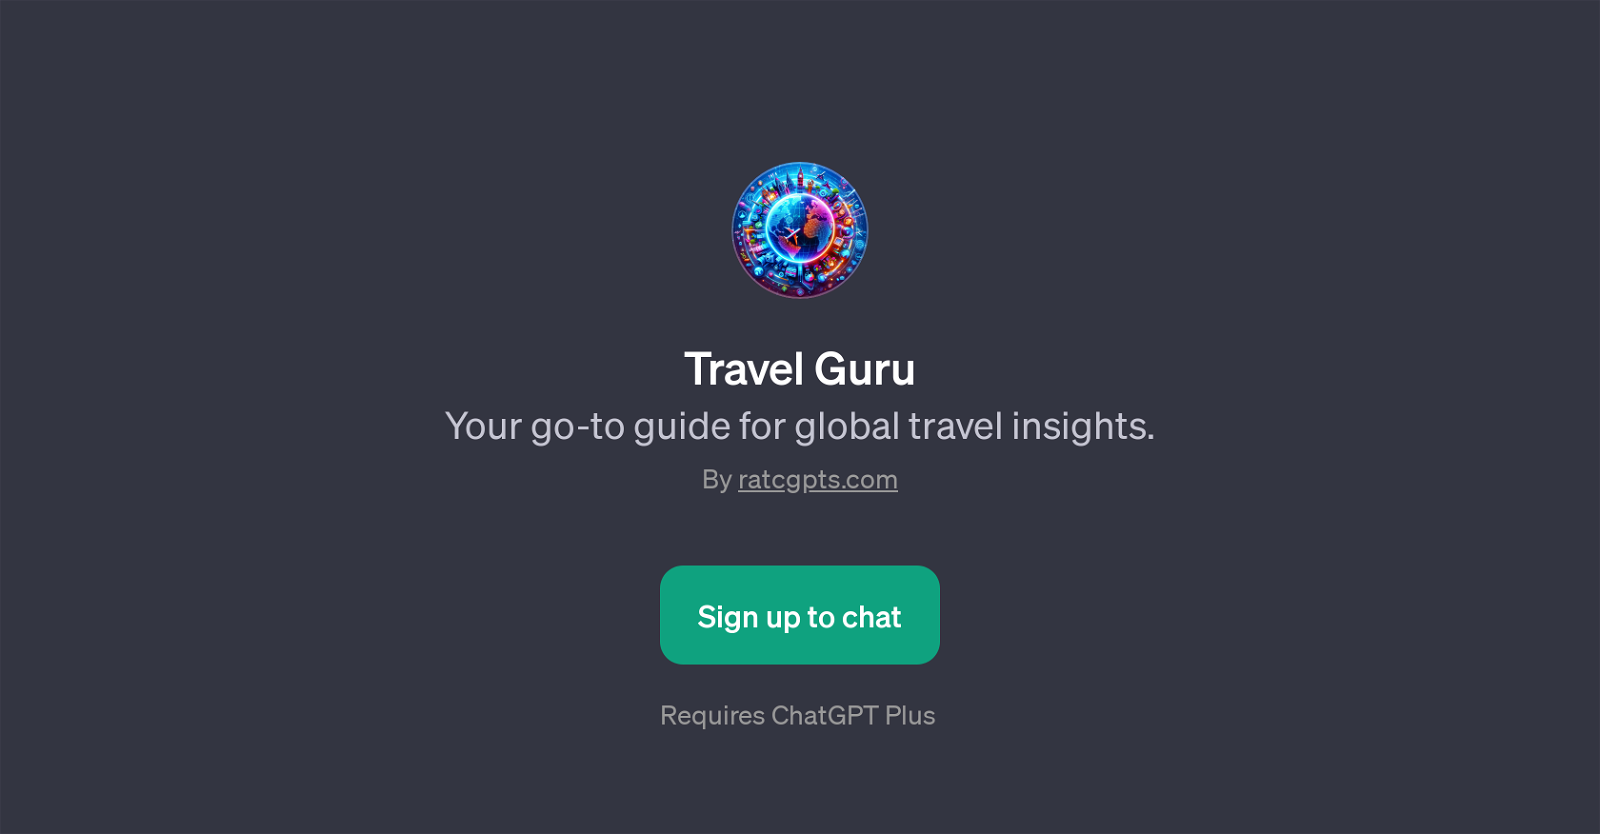 Travel Guru website